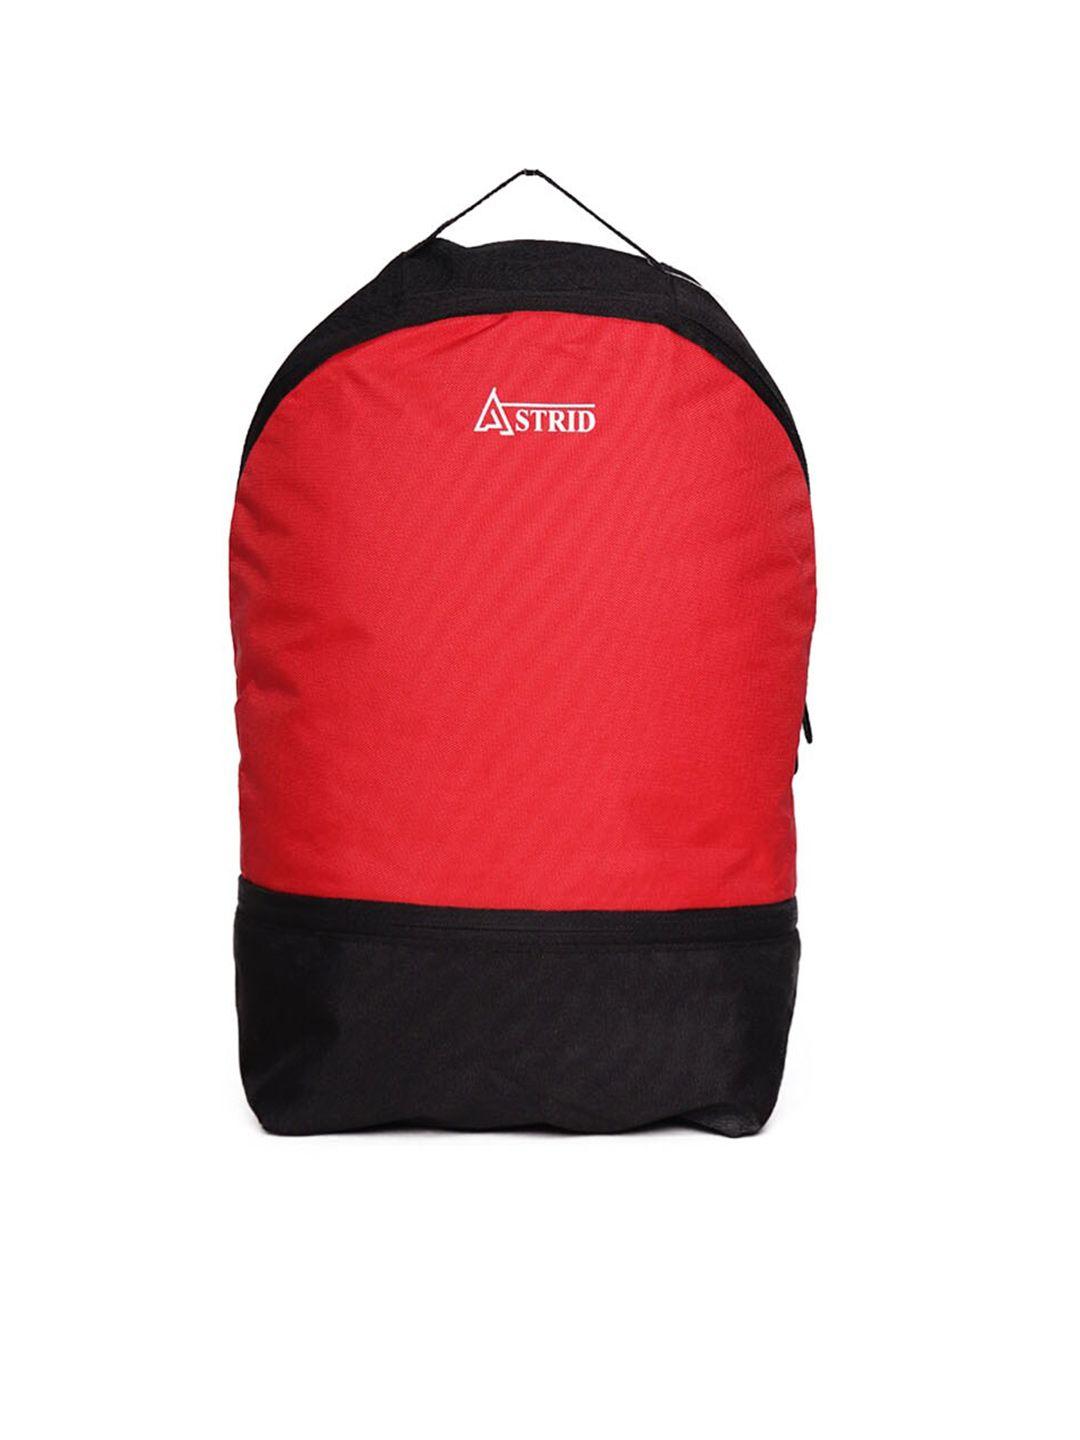 astrid men sports backpack